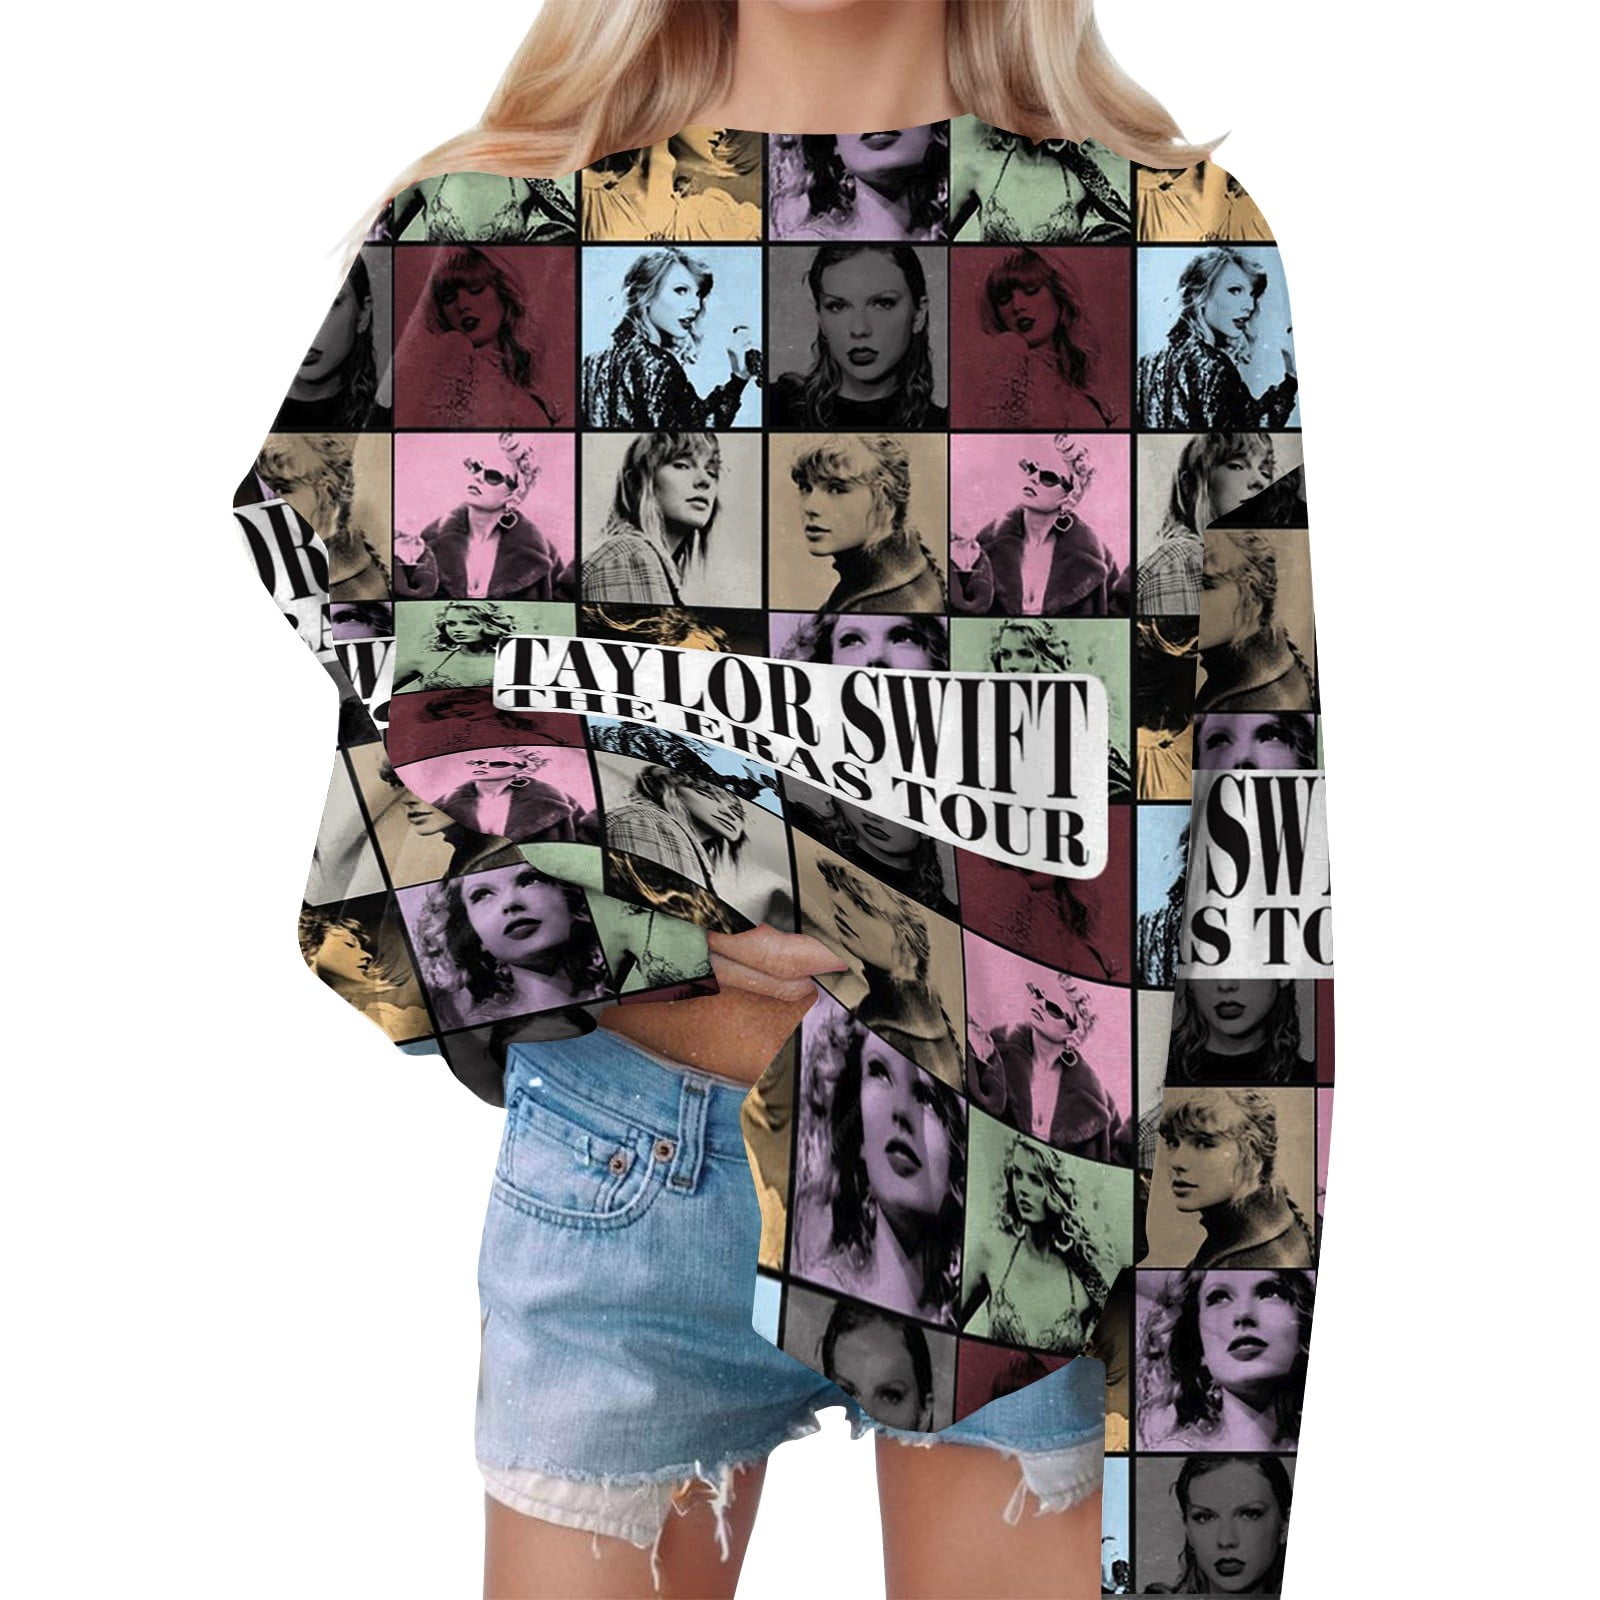 Taylor merch  Taylor swift merchandise, Taylor swift 1989 tour